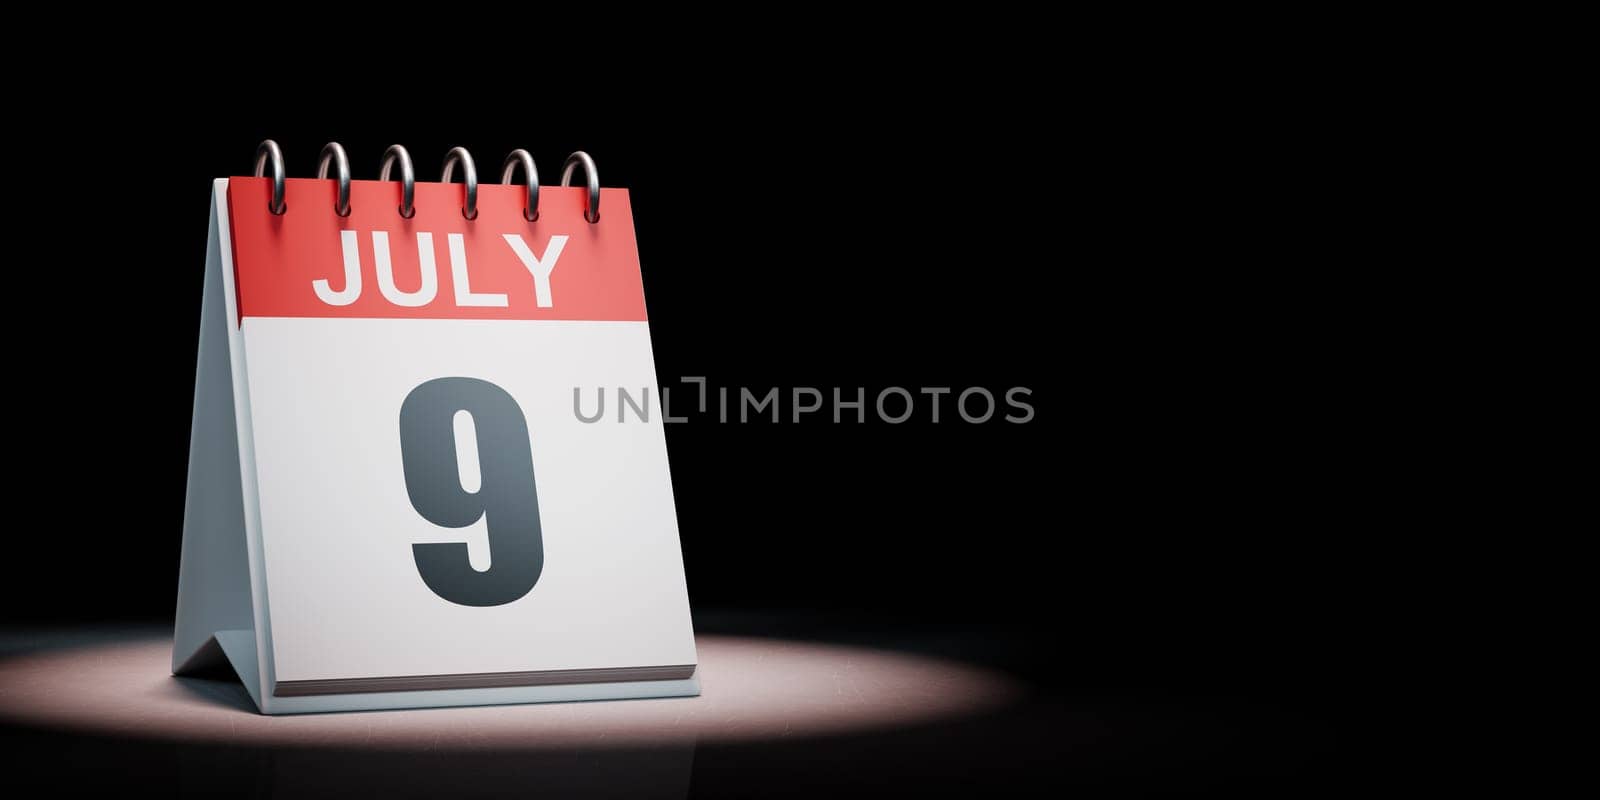 July 9 Calendar Spotlighted on Black Background by make